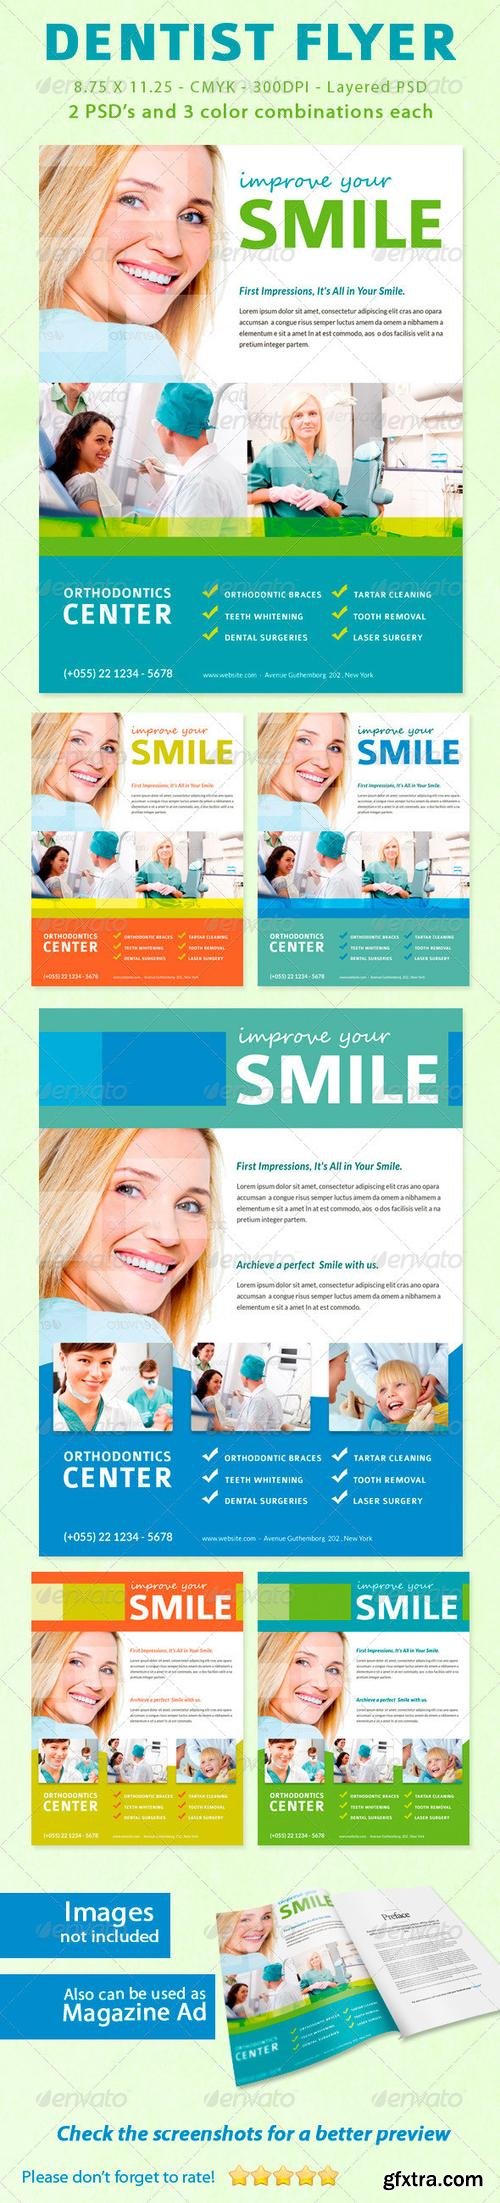 GraphicRiver - Dentist Flyer / Magazine Ad - 5542503